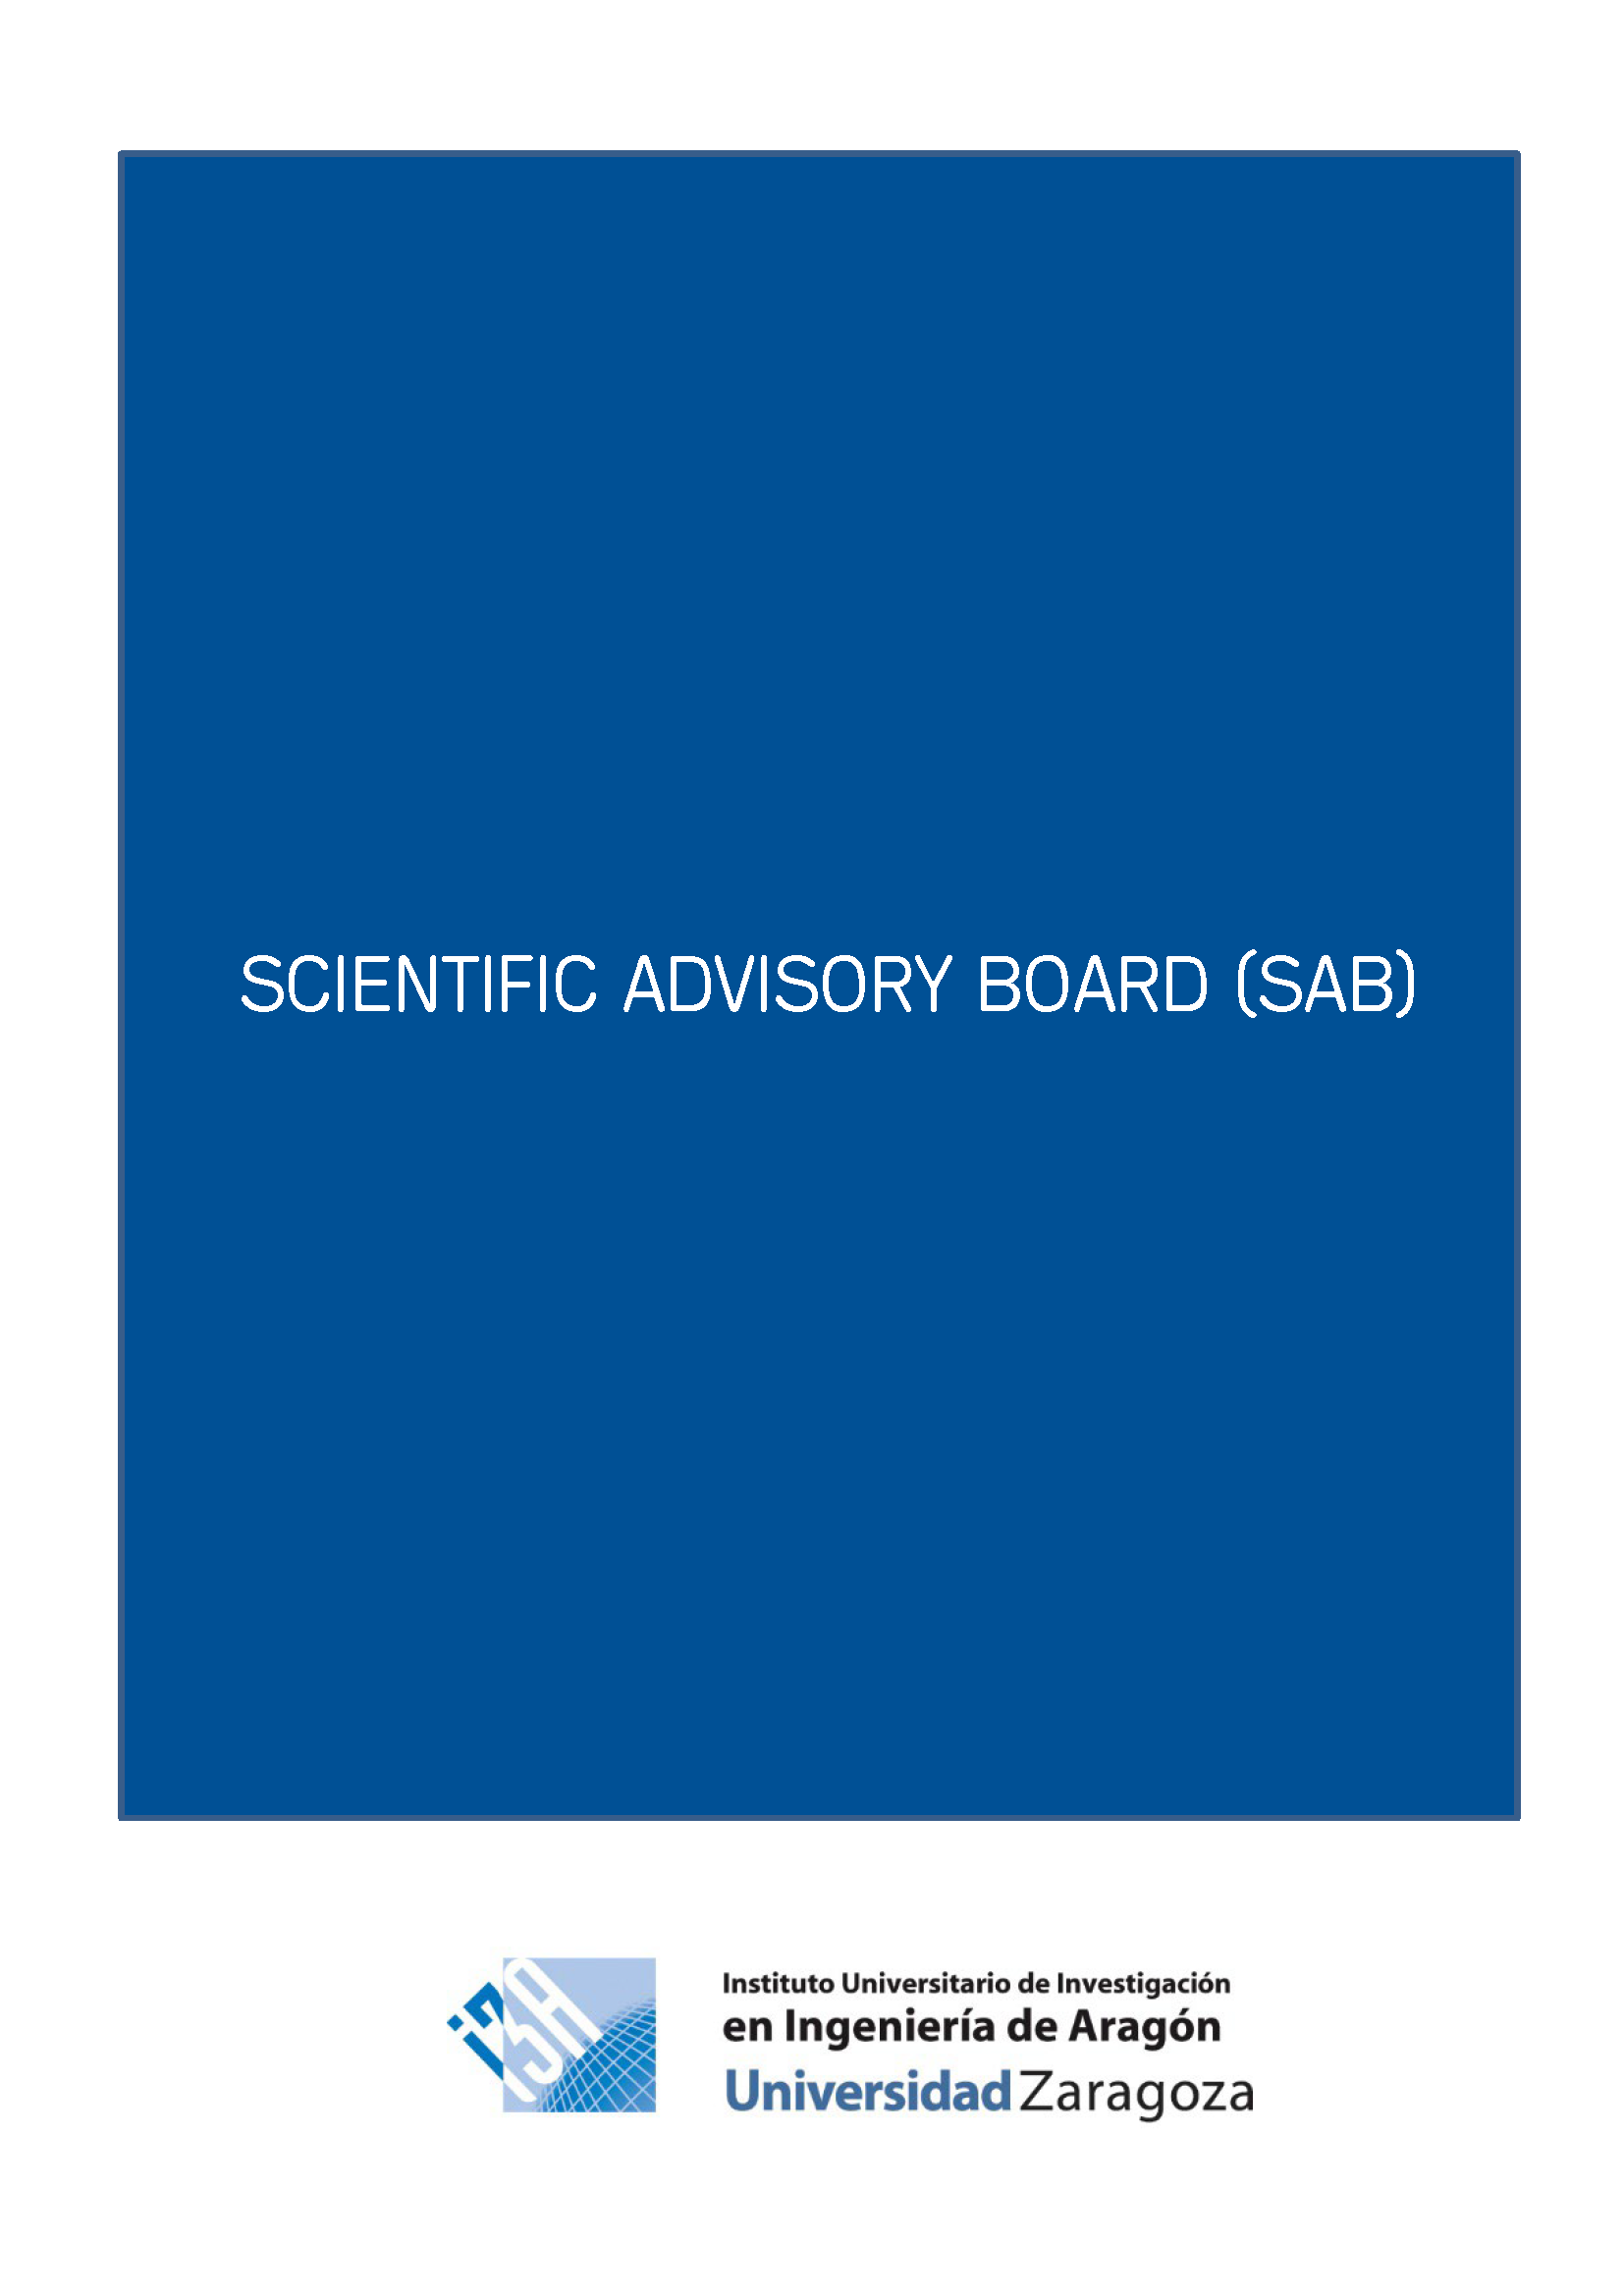 SCIENTIFIC ADVISORY BOARD (SAB)